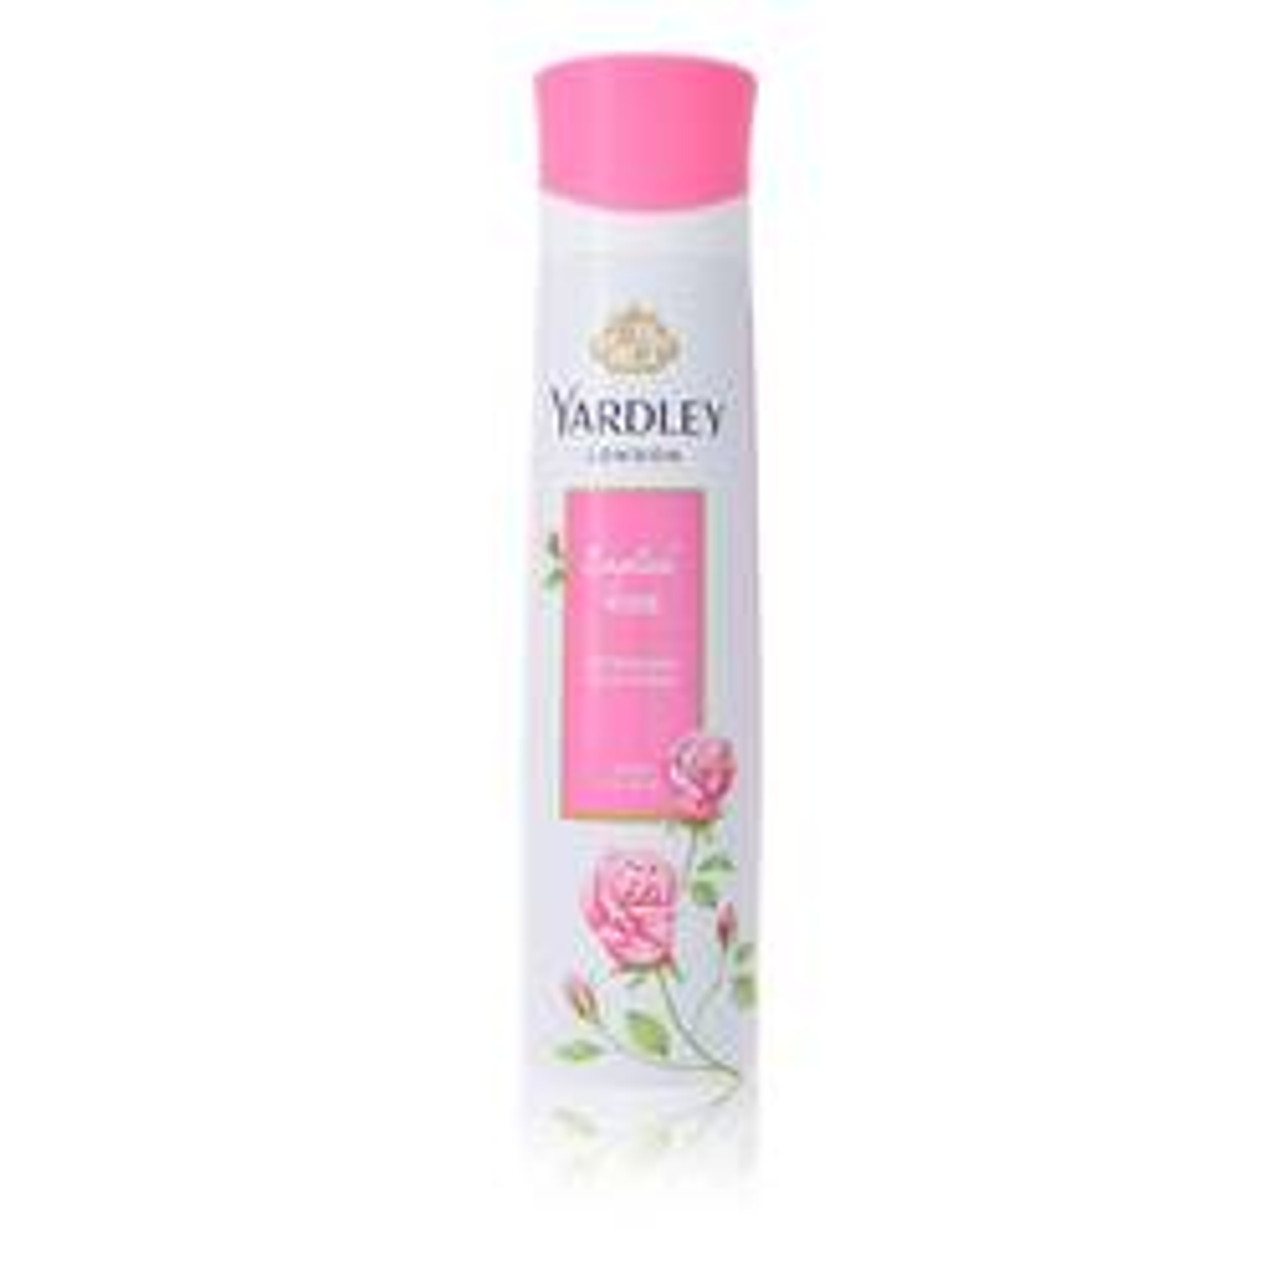 English Rose Yardley Perfume By Yardley London Body Spray 5.1 oz for Women - [From 35.00 - Choose pk Qty ] - *Ships from Miami